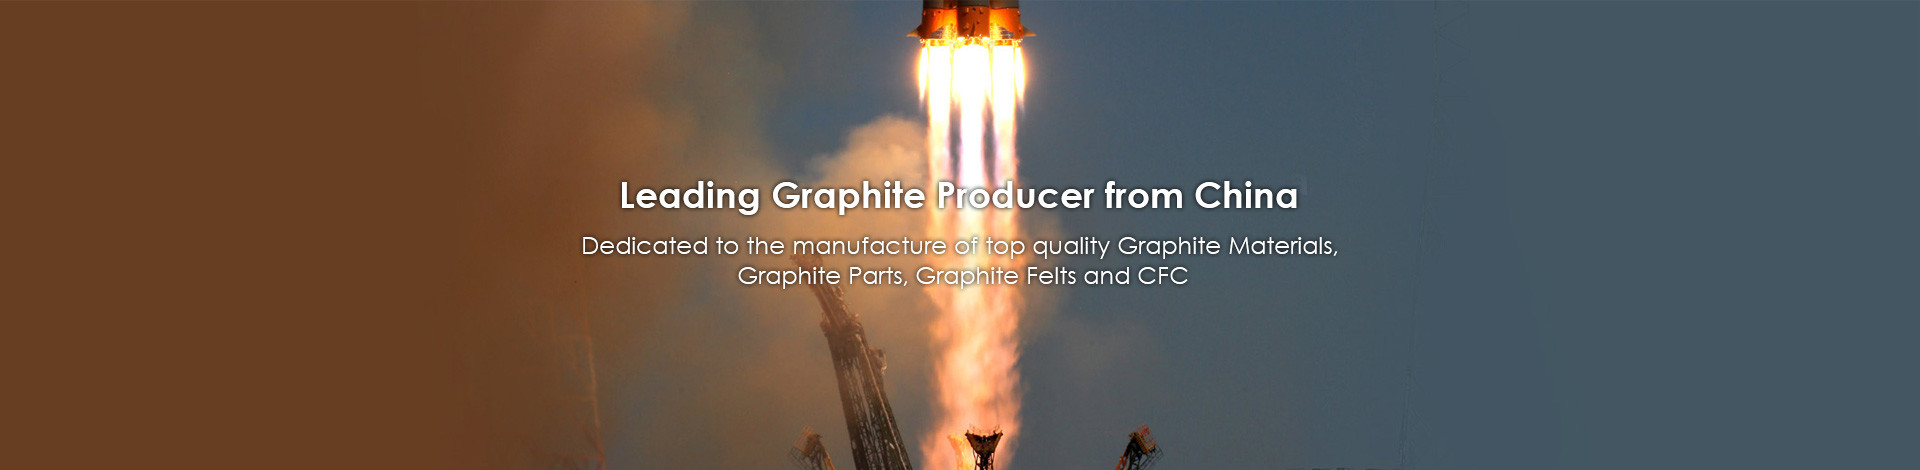 graphite producer